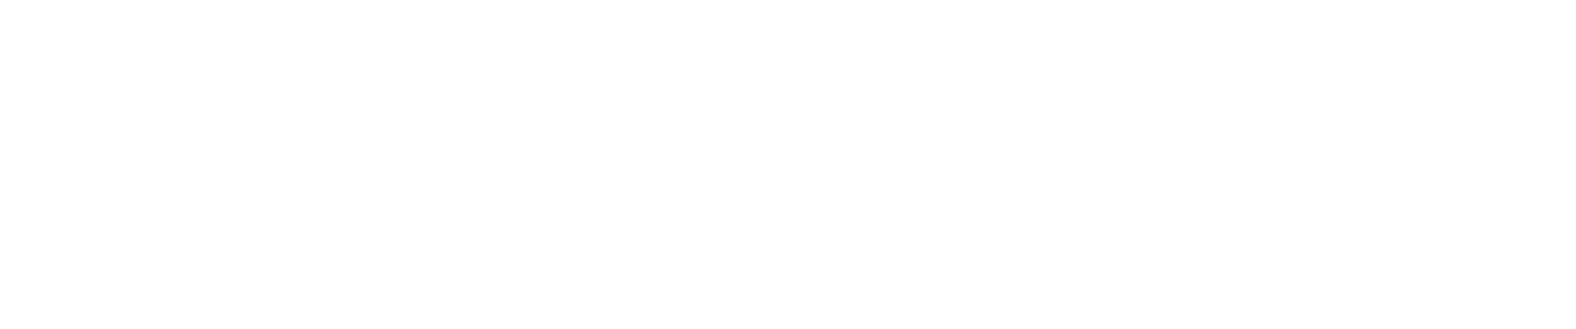 Kerry Group Logo groß für dunkle Hintergründe (transparentes PNG)